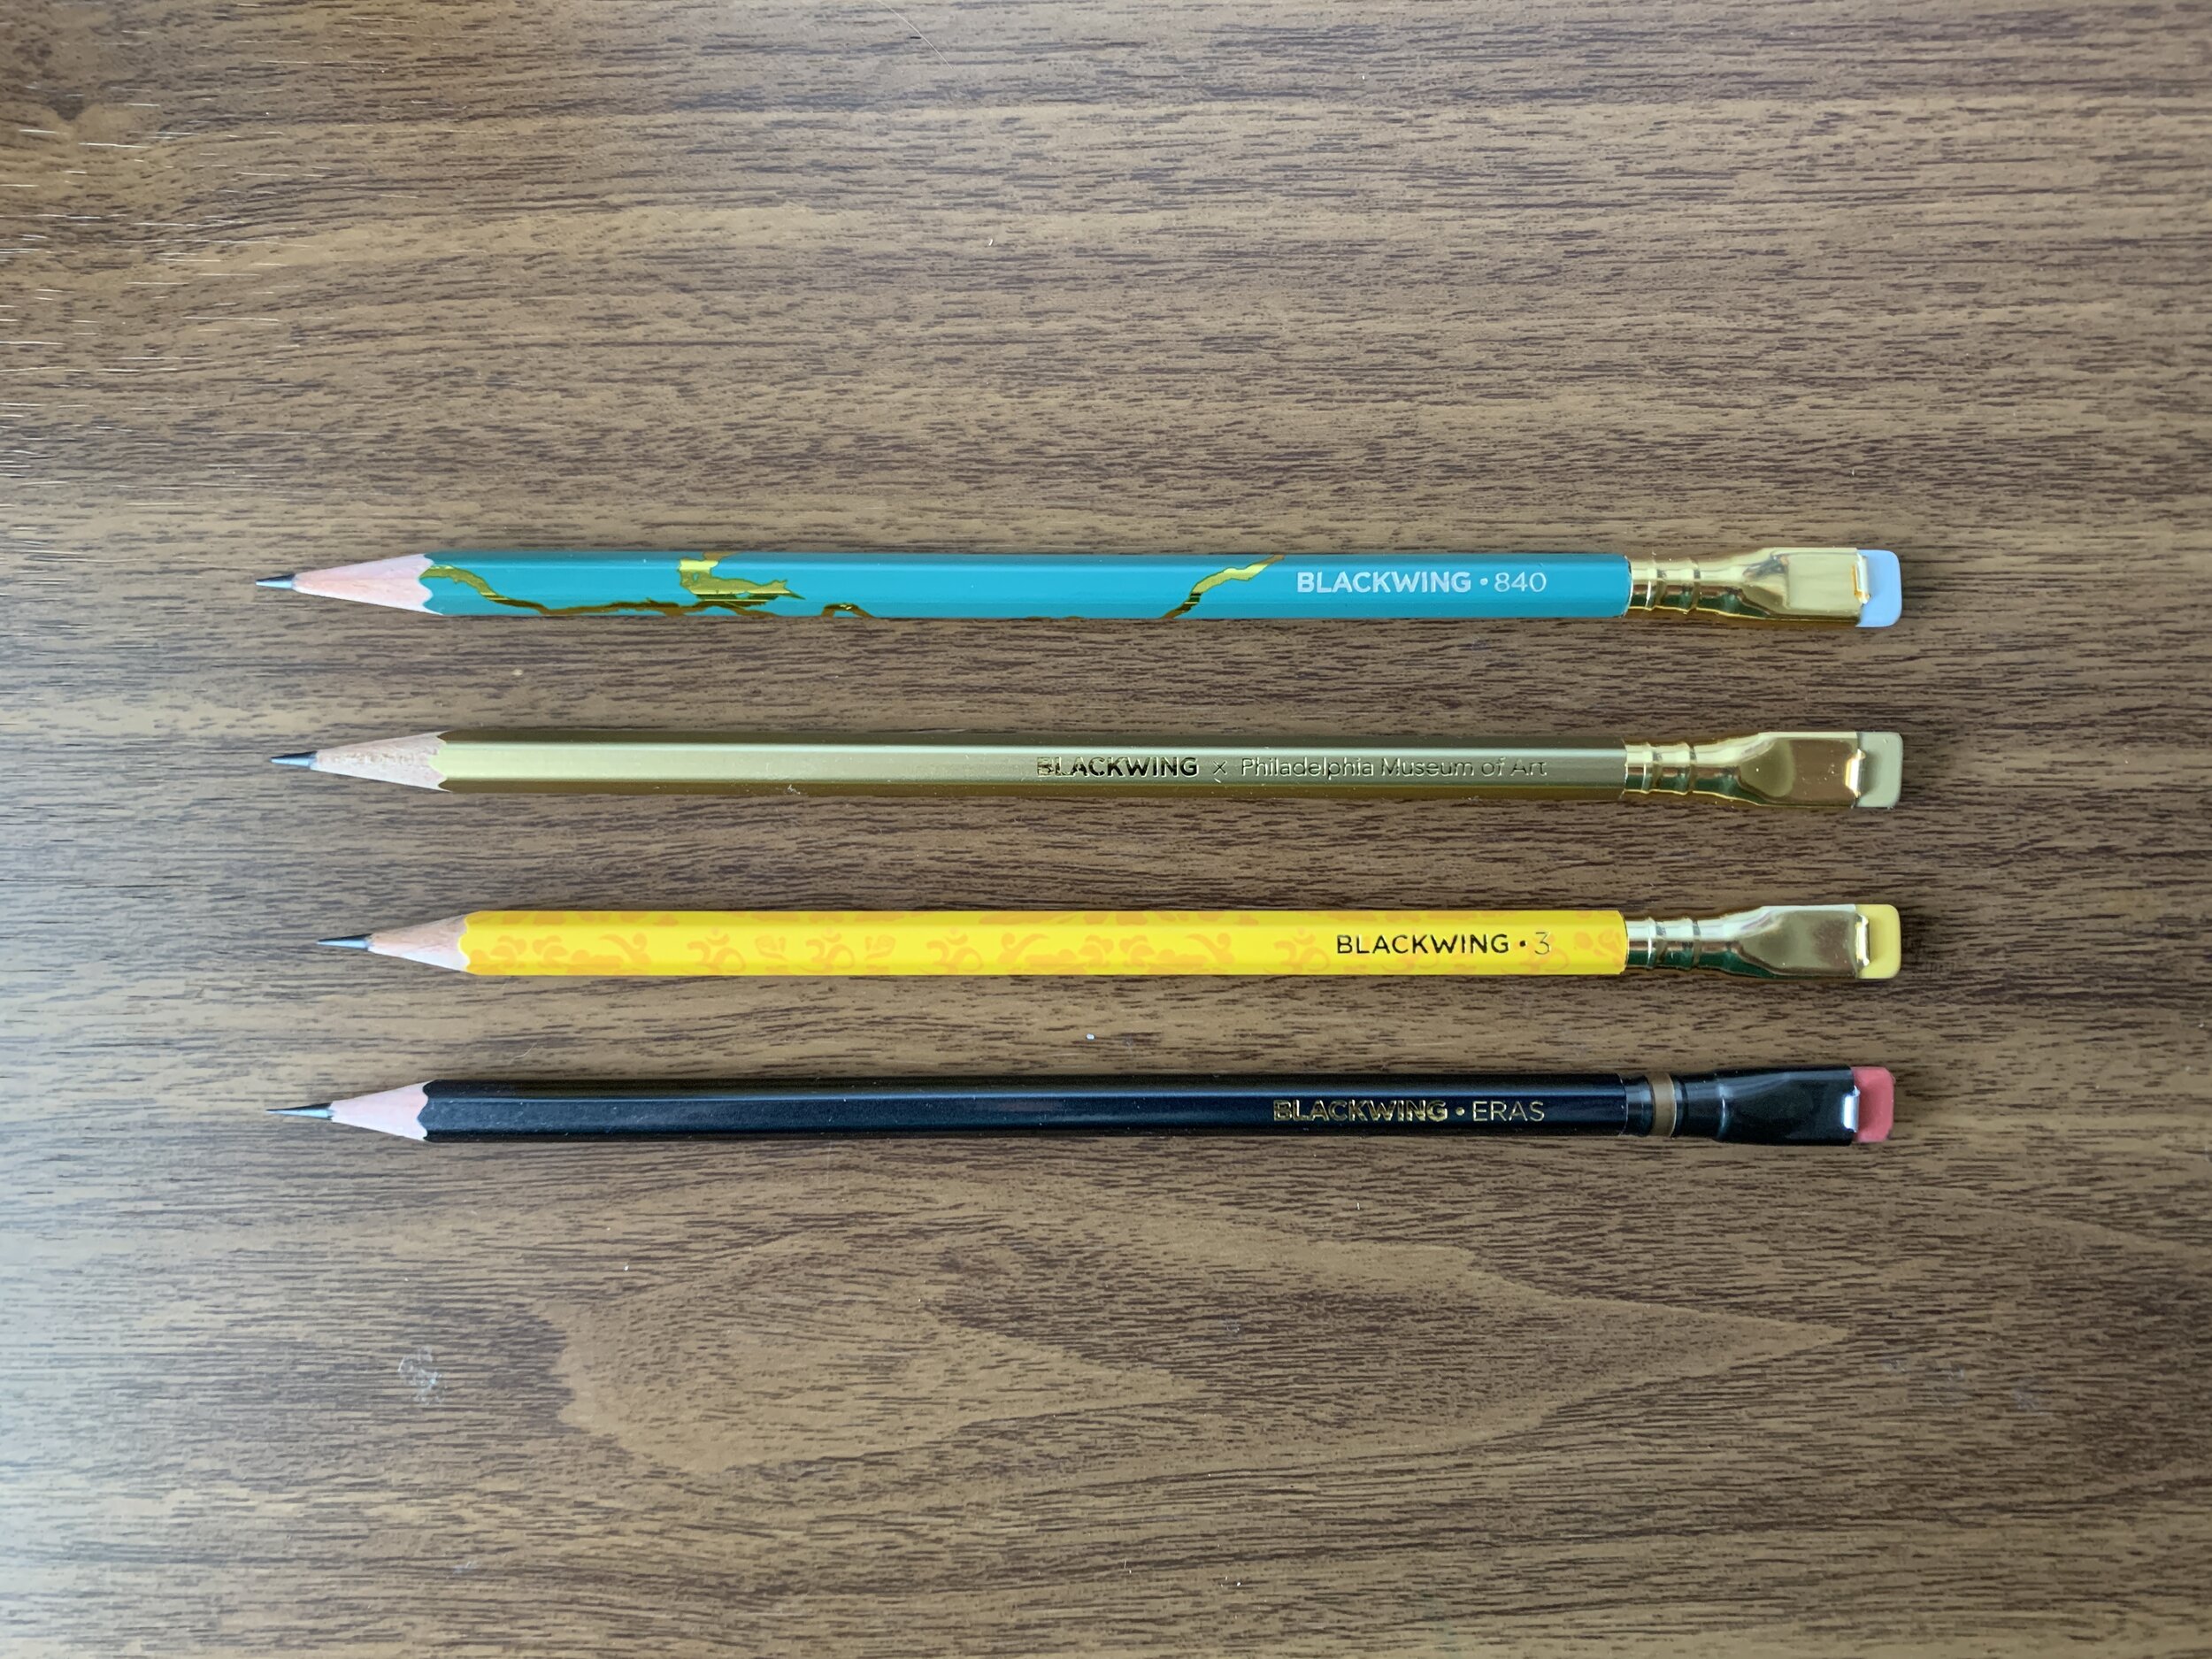 Palomino Blackwing Pencils Volume 4 mars: 3 Pencils NO Box 